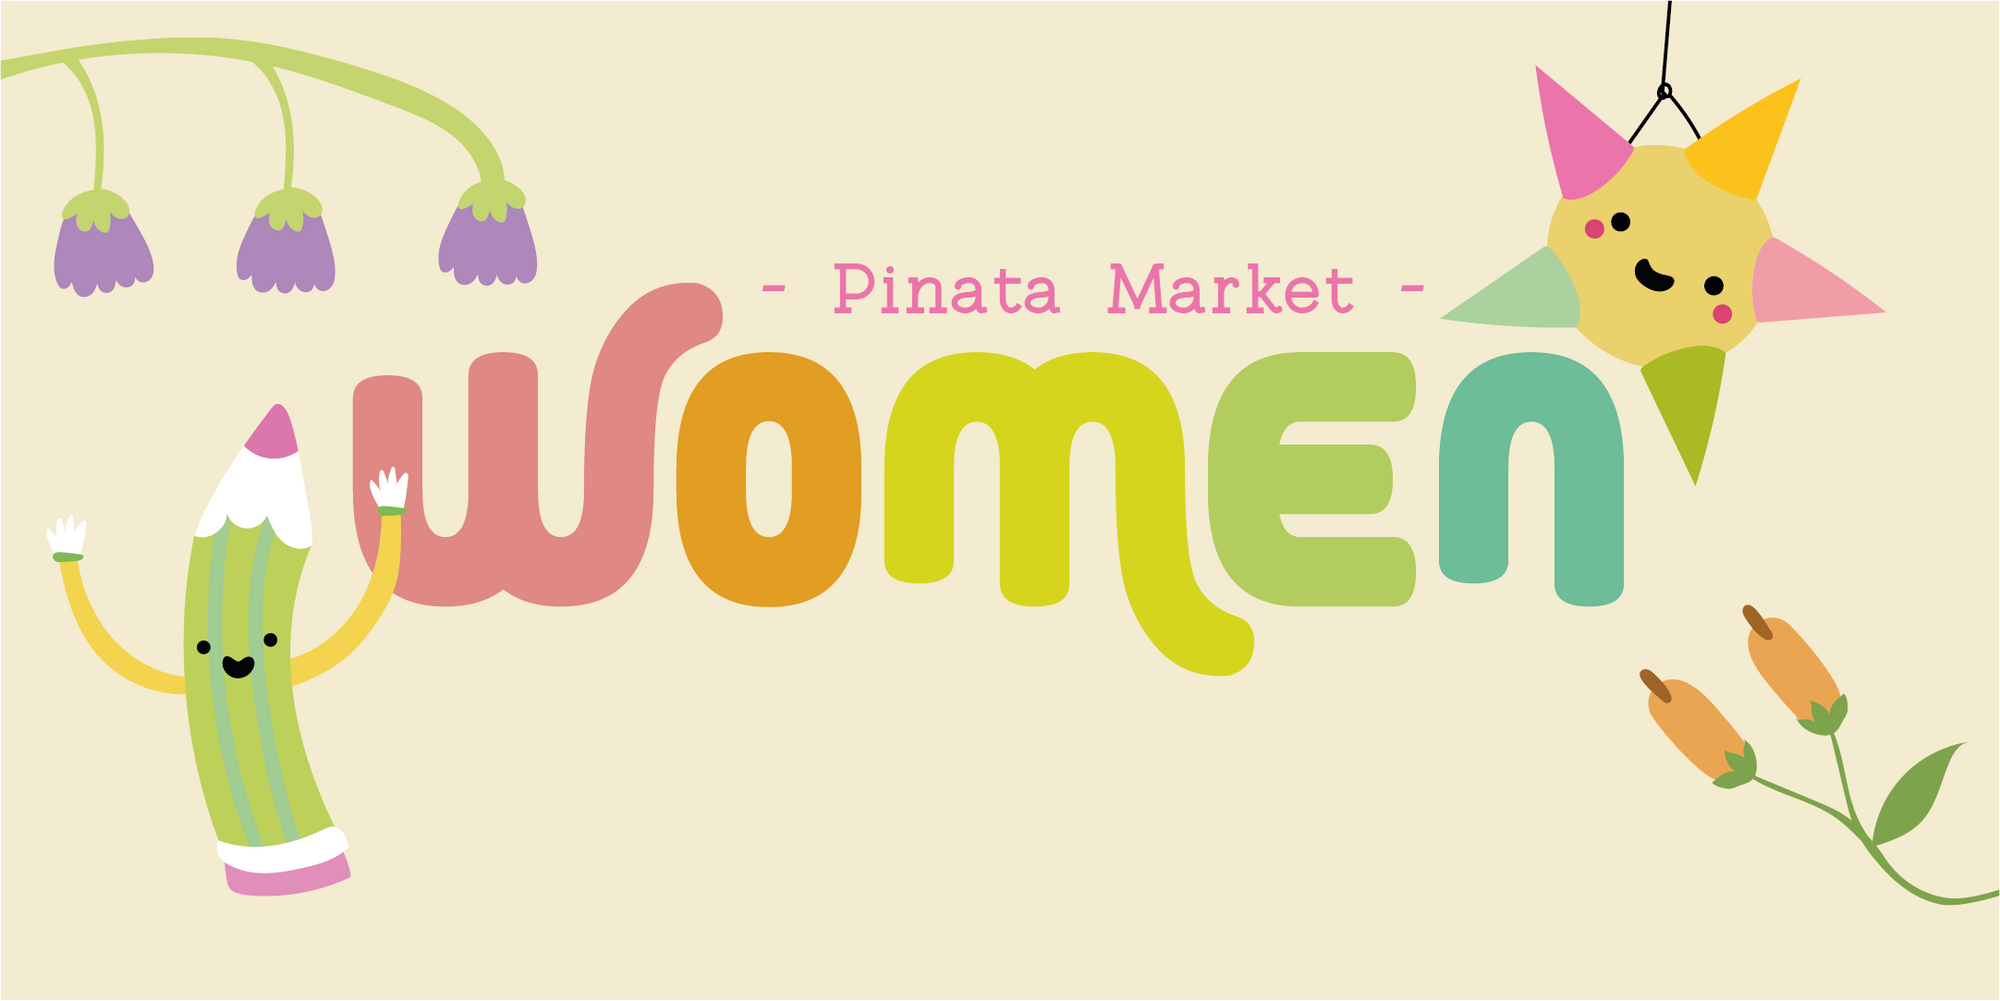 Women in the Piñata Market